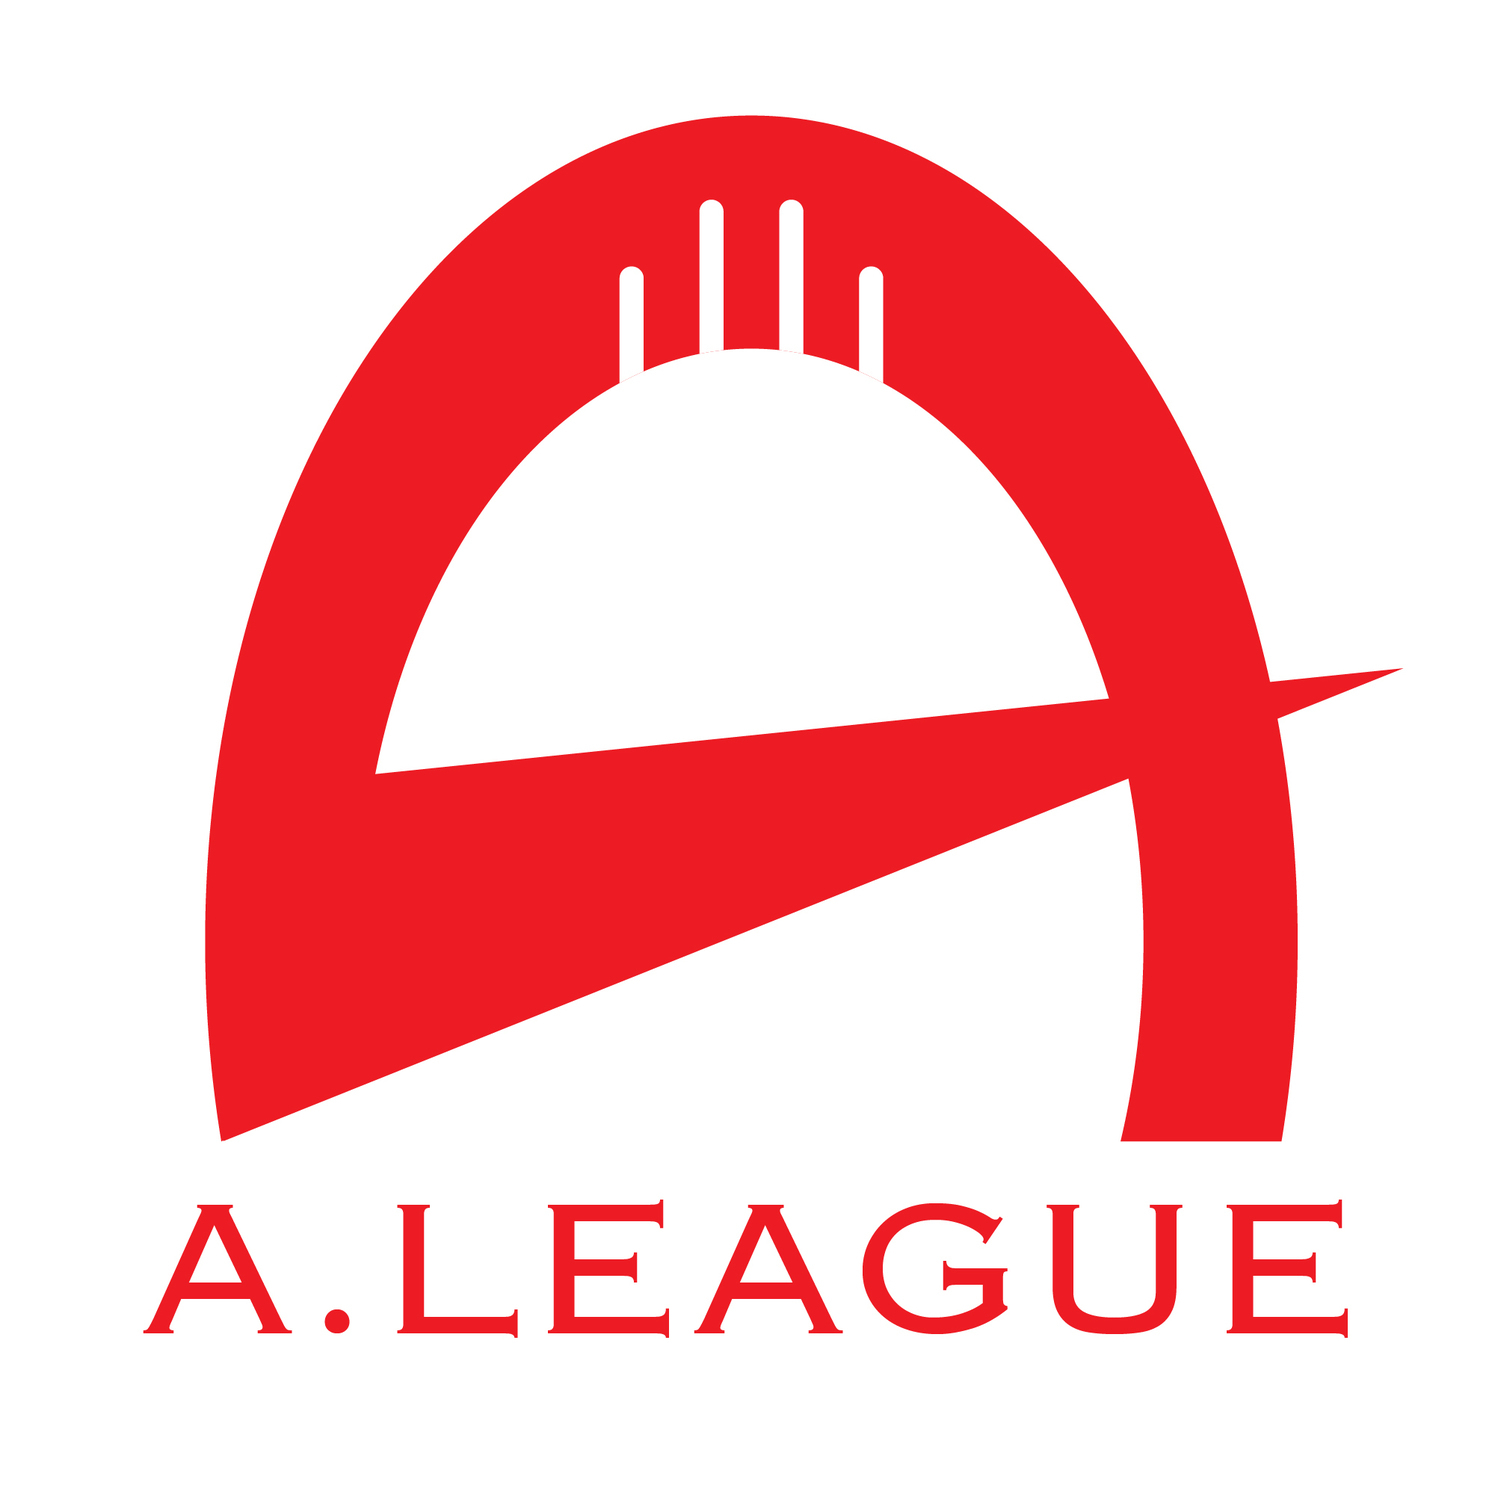 A league logo